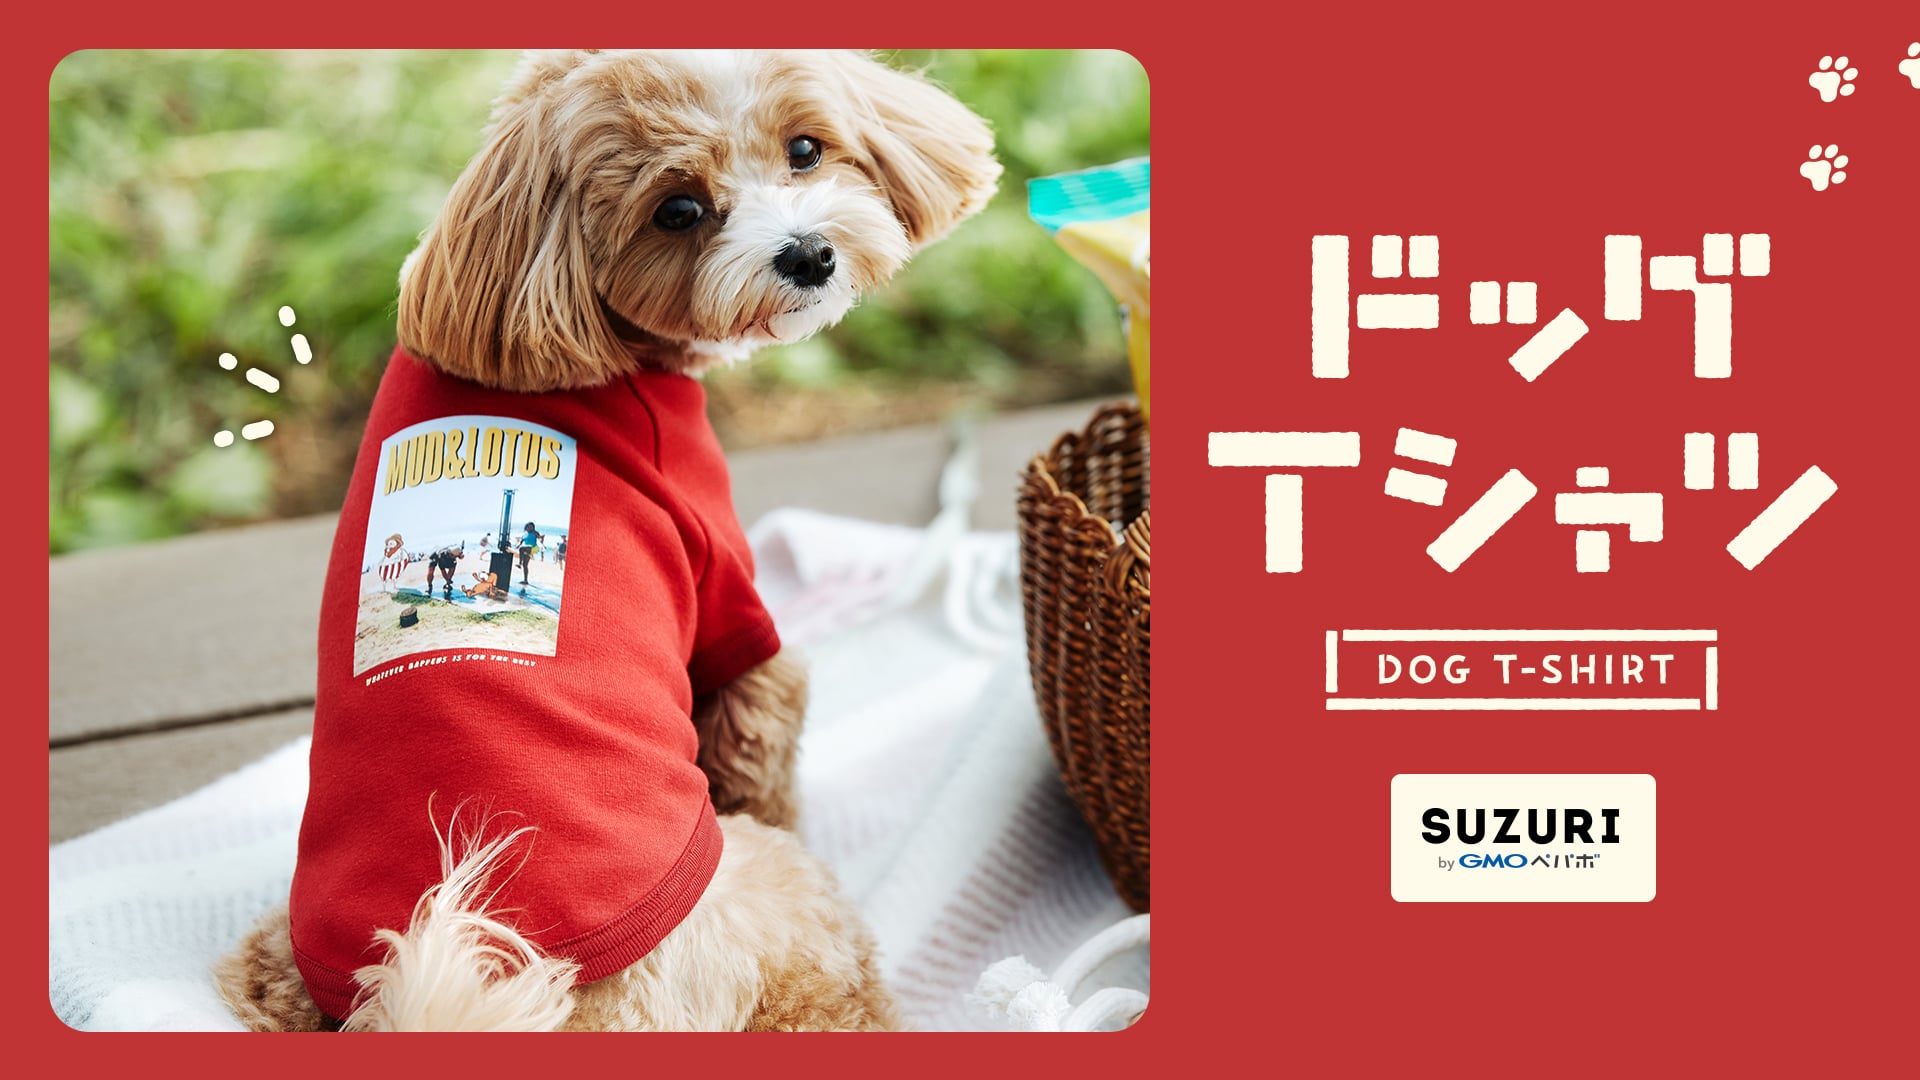 SUZURI byGMOペパボ「ドッグTシャツ」のアイキャッチ画像。背景に写真が印刷された「ドッグTシャツ」を着た犬がこちらを見つめている様子。